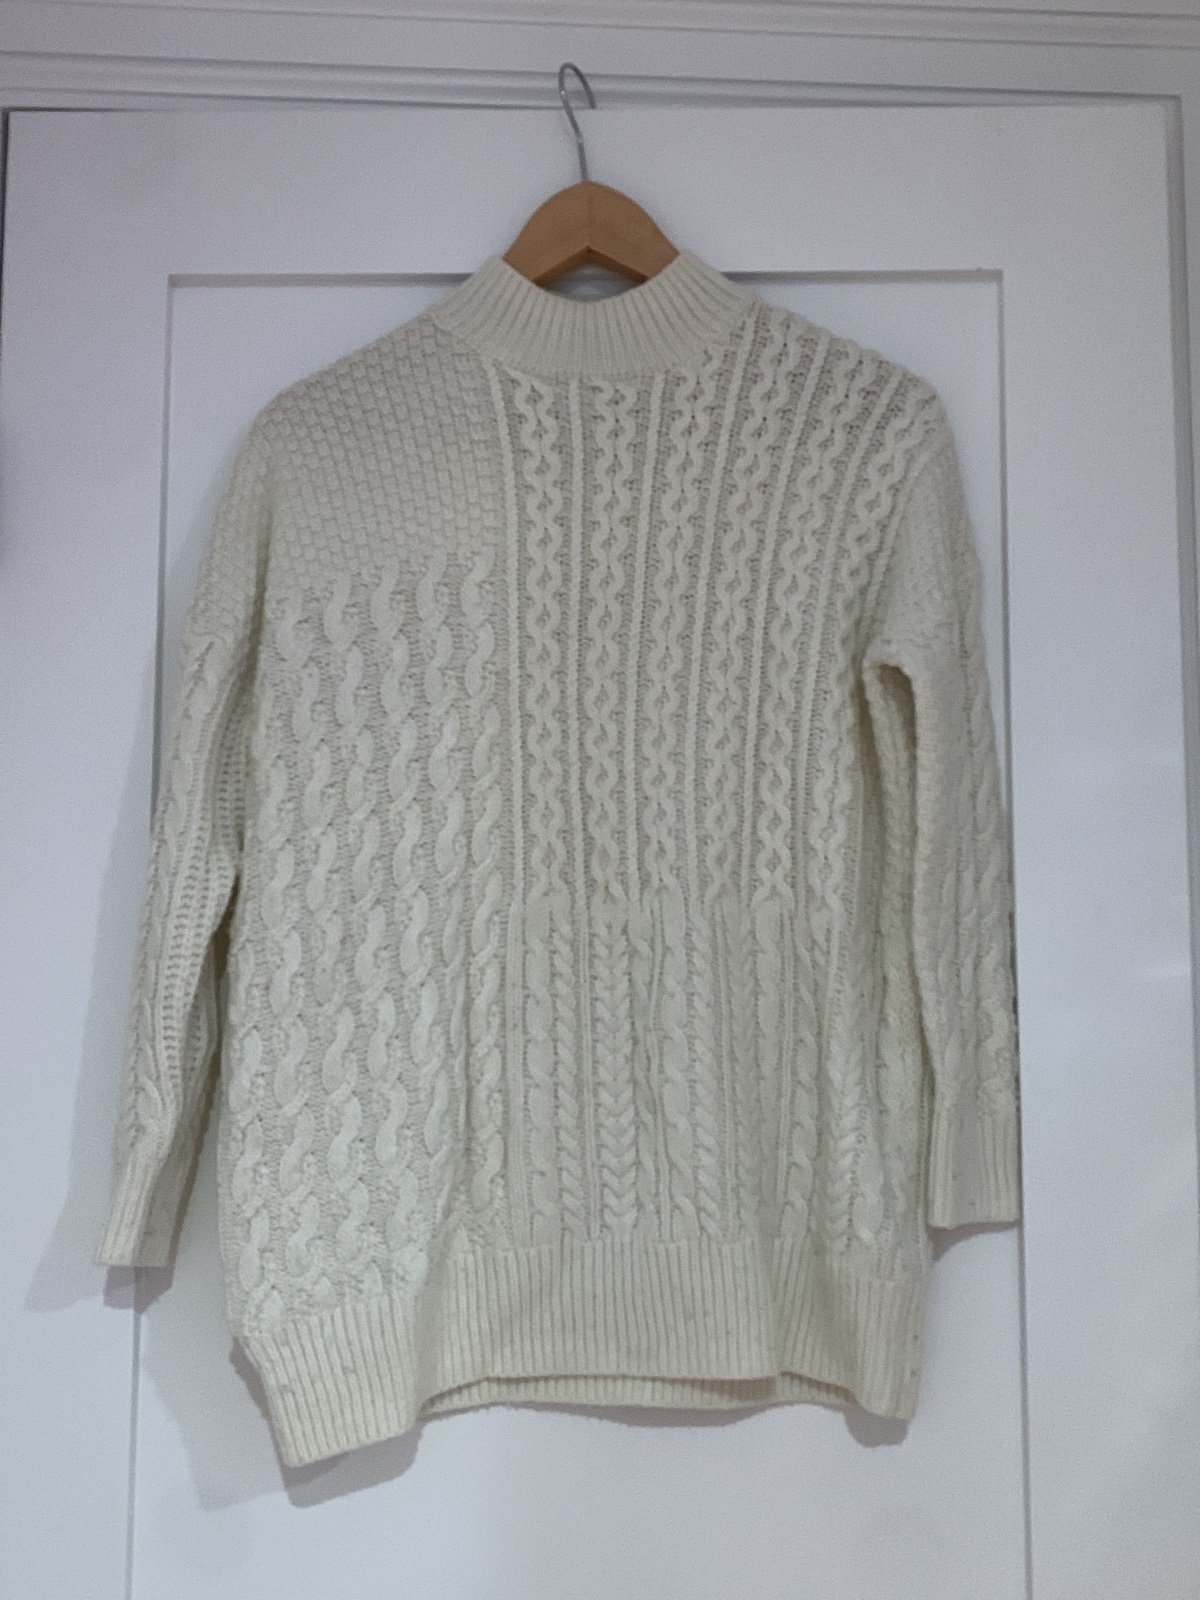 Affordable Sweater FKujV600J Outlet Store